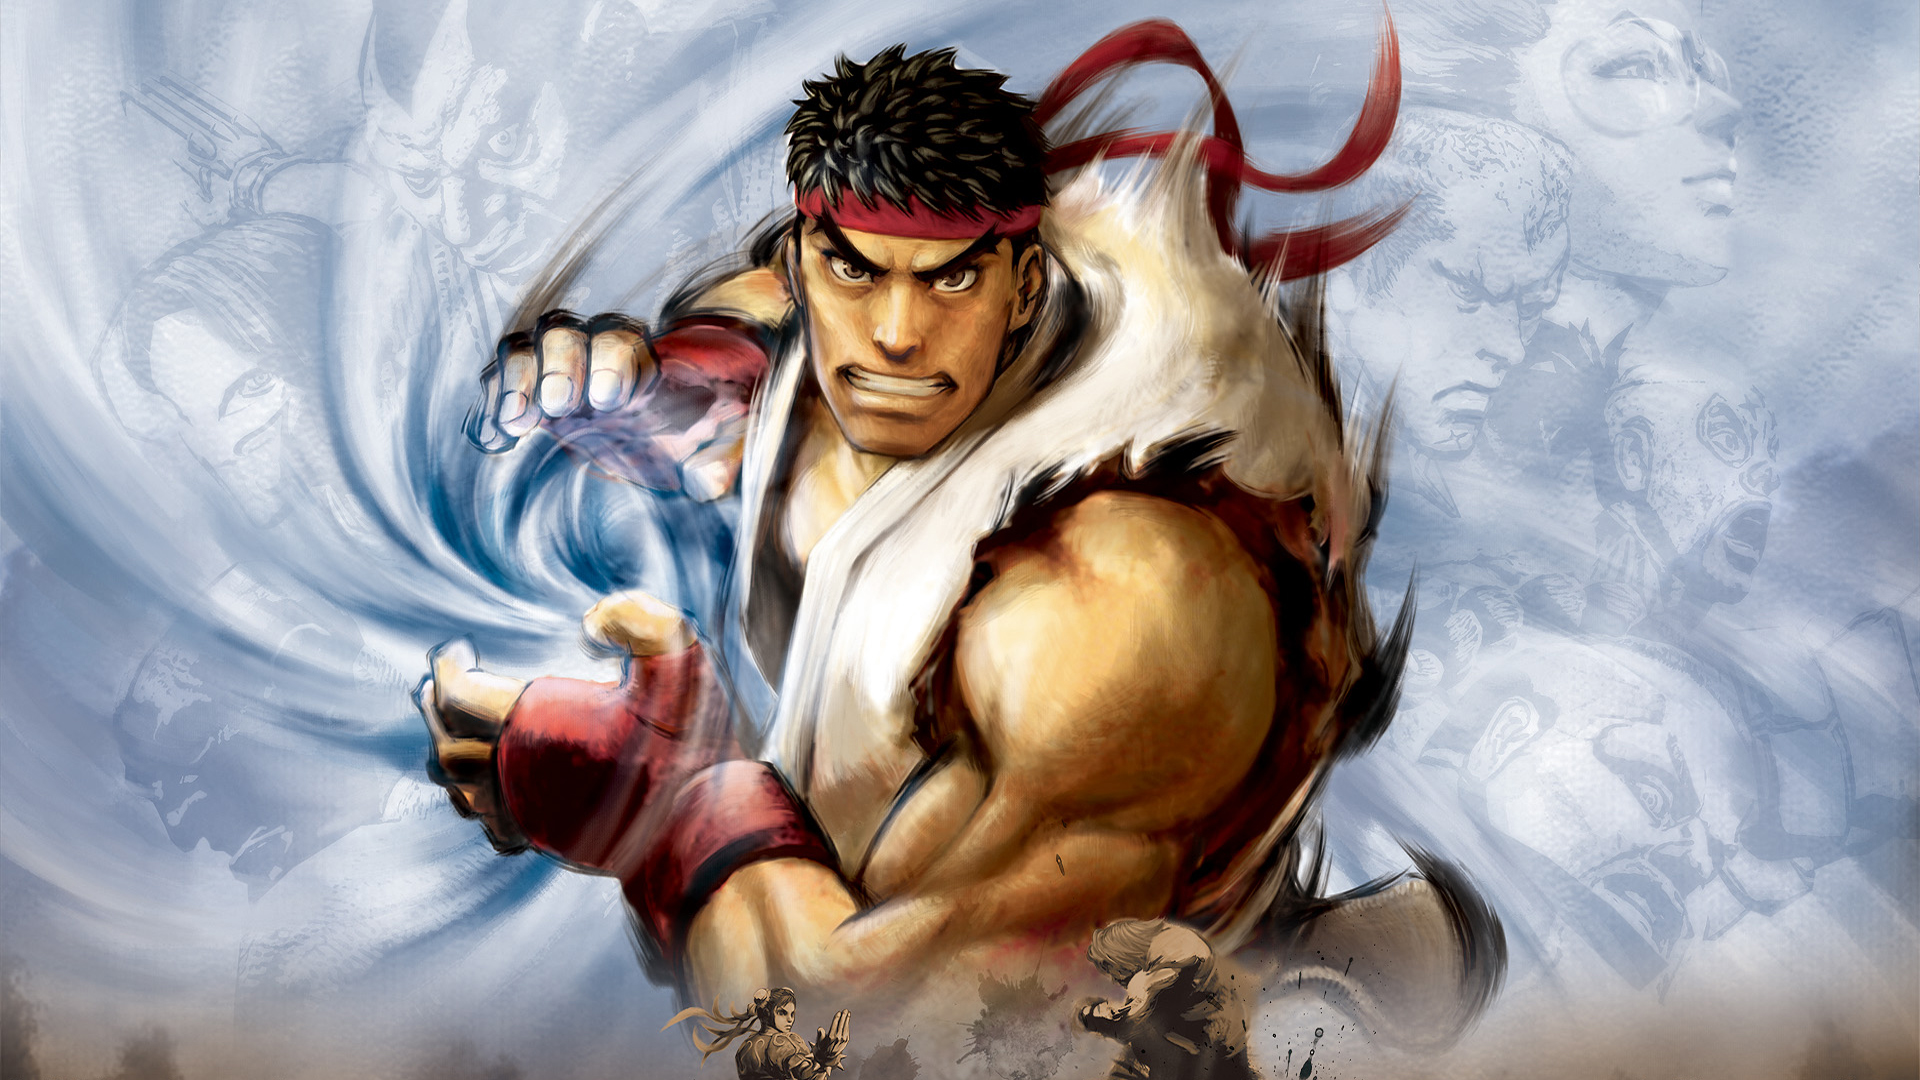 Hd wallpaper Video Games Ryu Street Fighter Iv Fresh New Hd